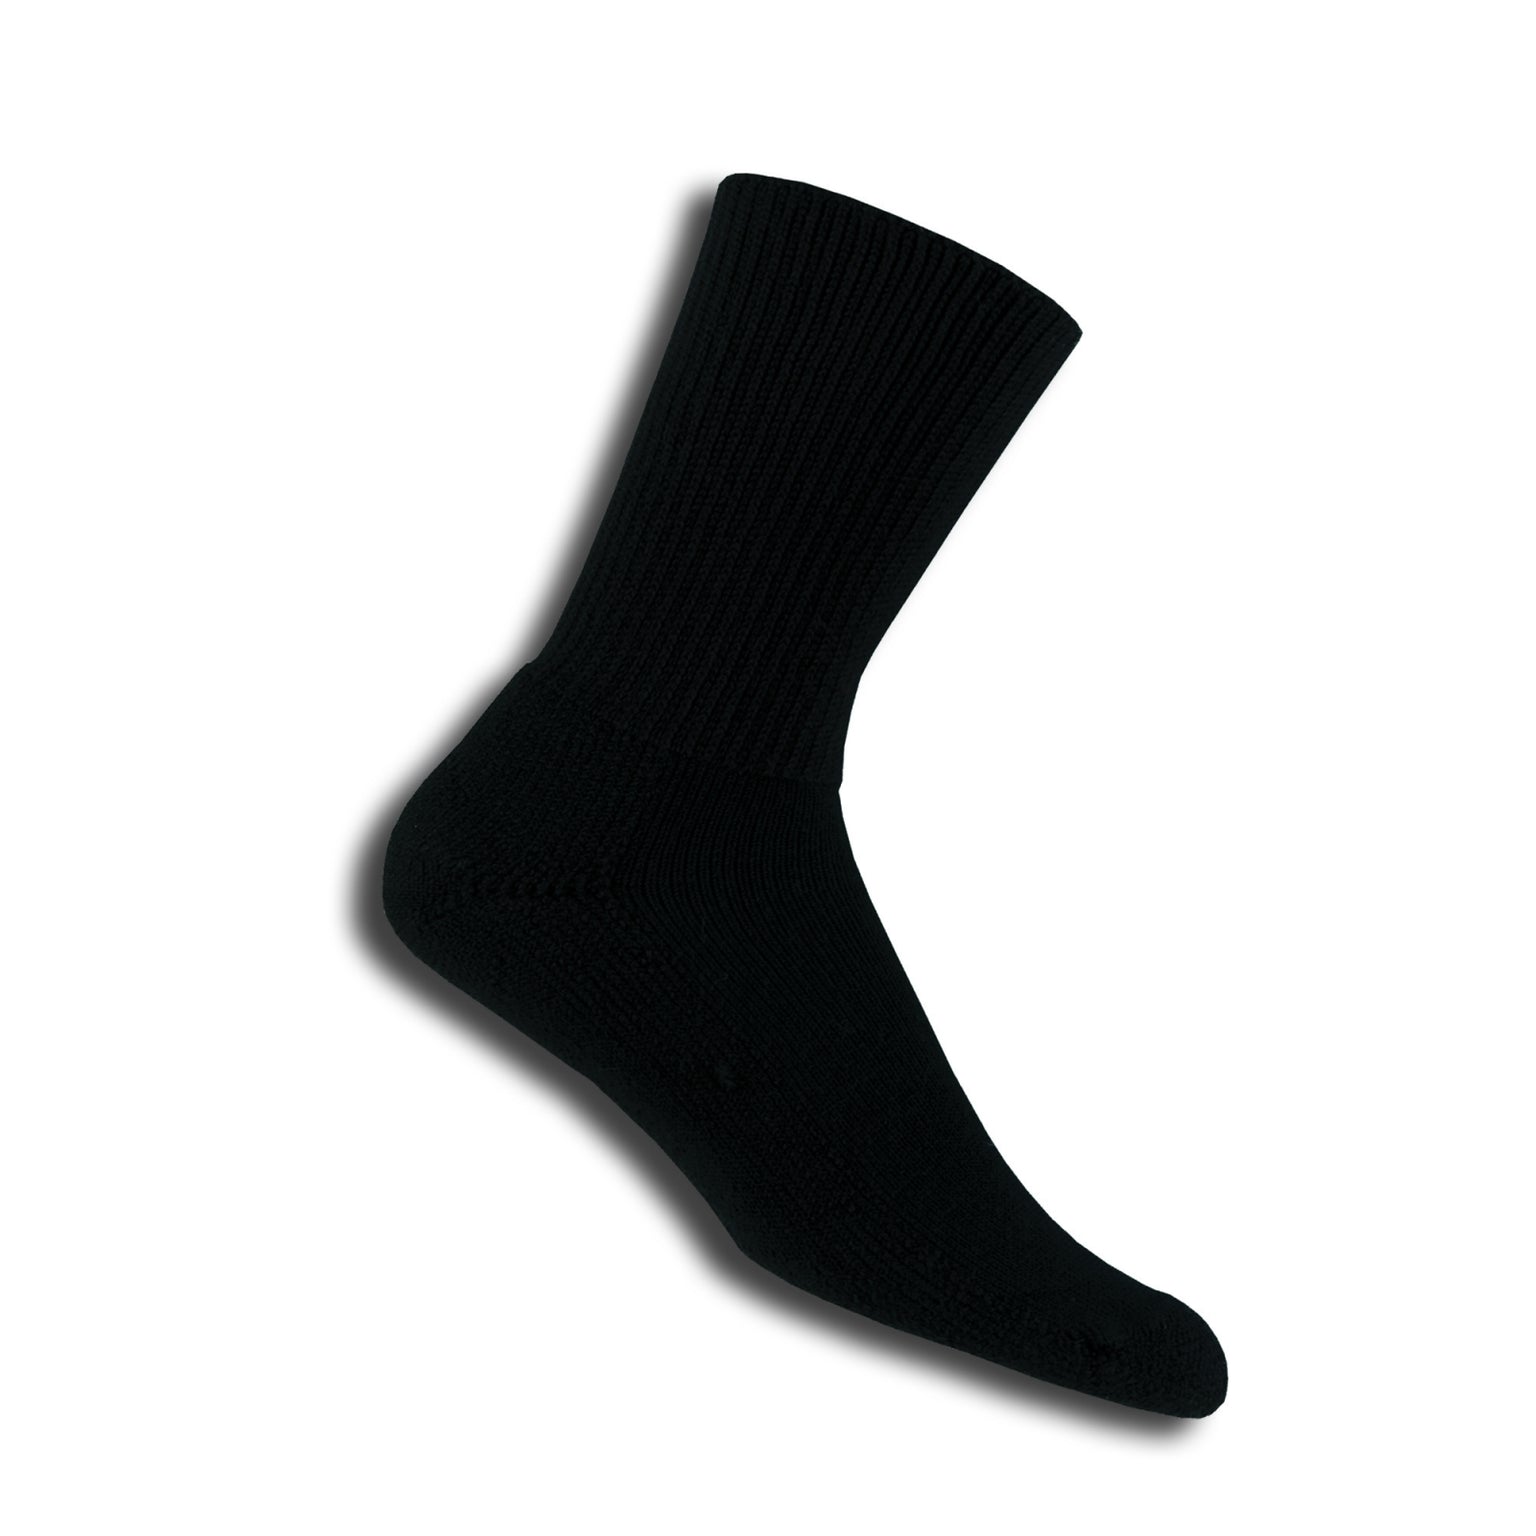 Thorlo Socks Australia | Thorlo Running Socks | Thorlo Socks ...